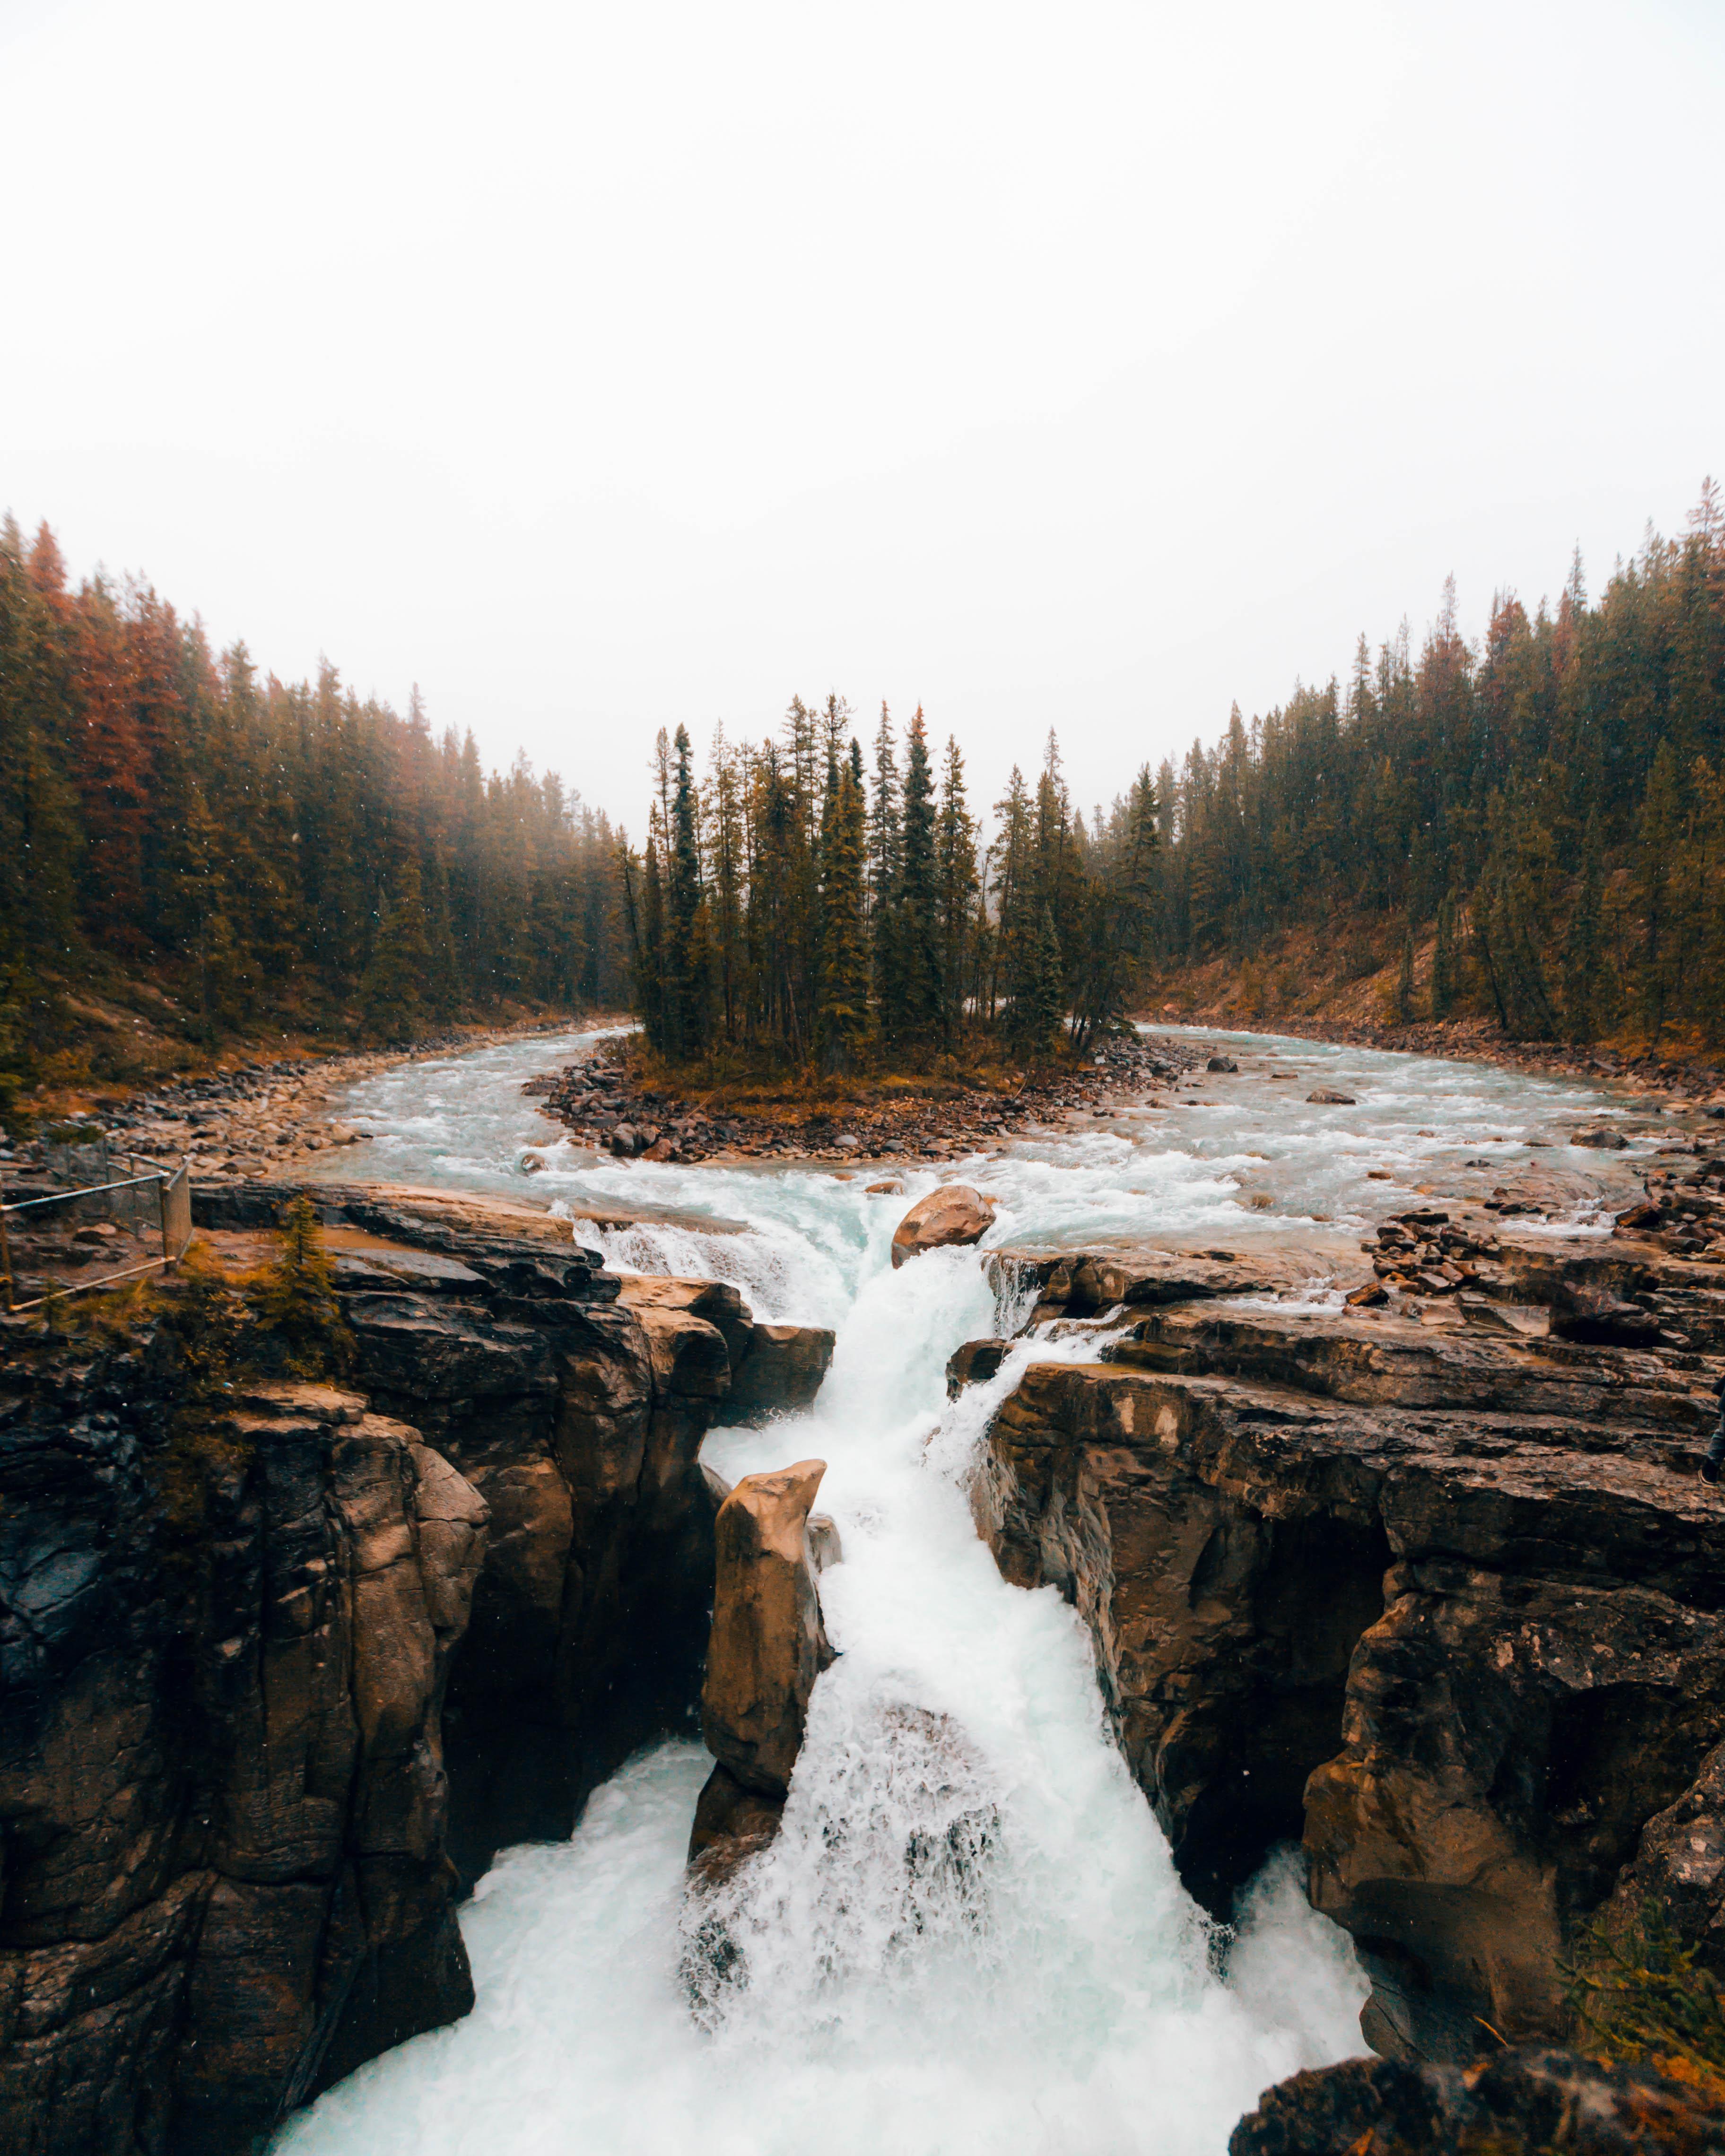 Sunwapta Falls in Jasper National Park, Alberta. [OC] [3648 x 4560